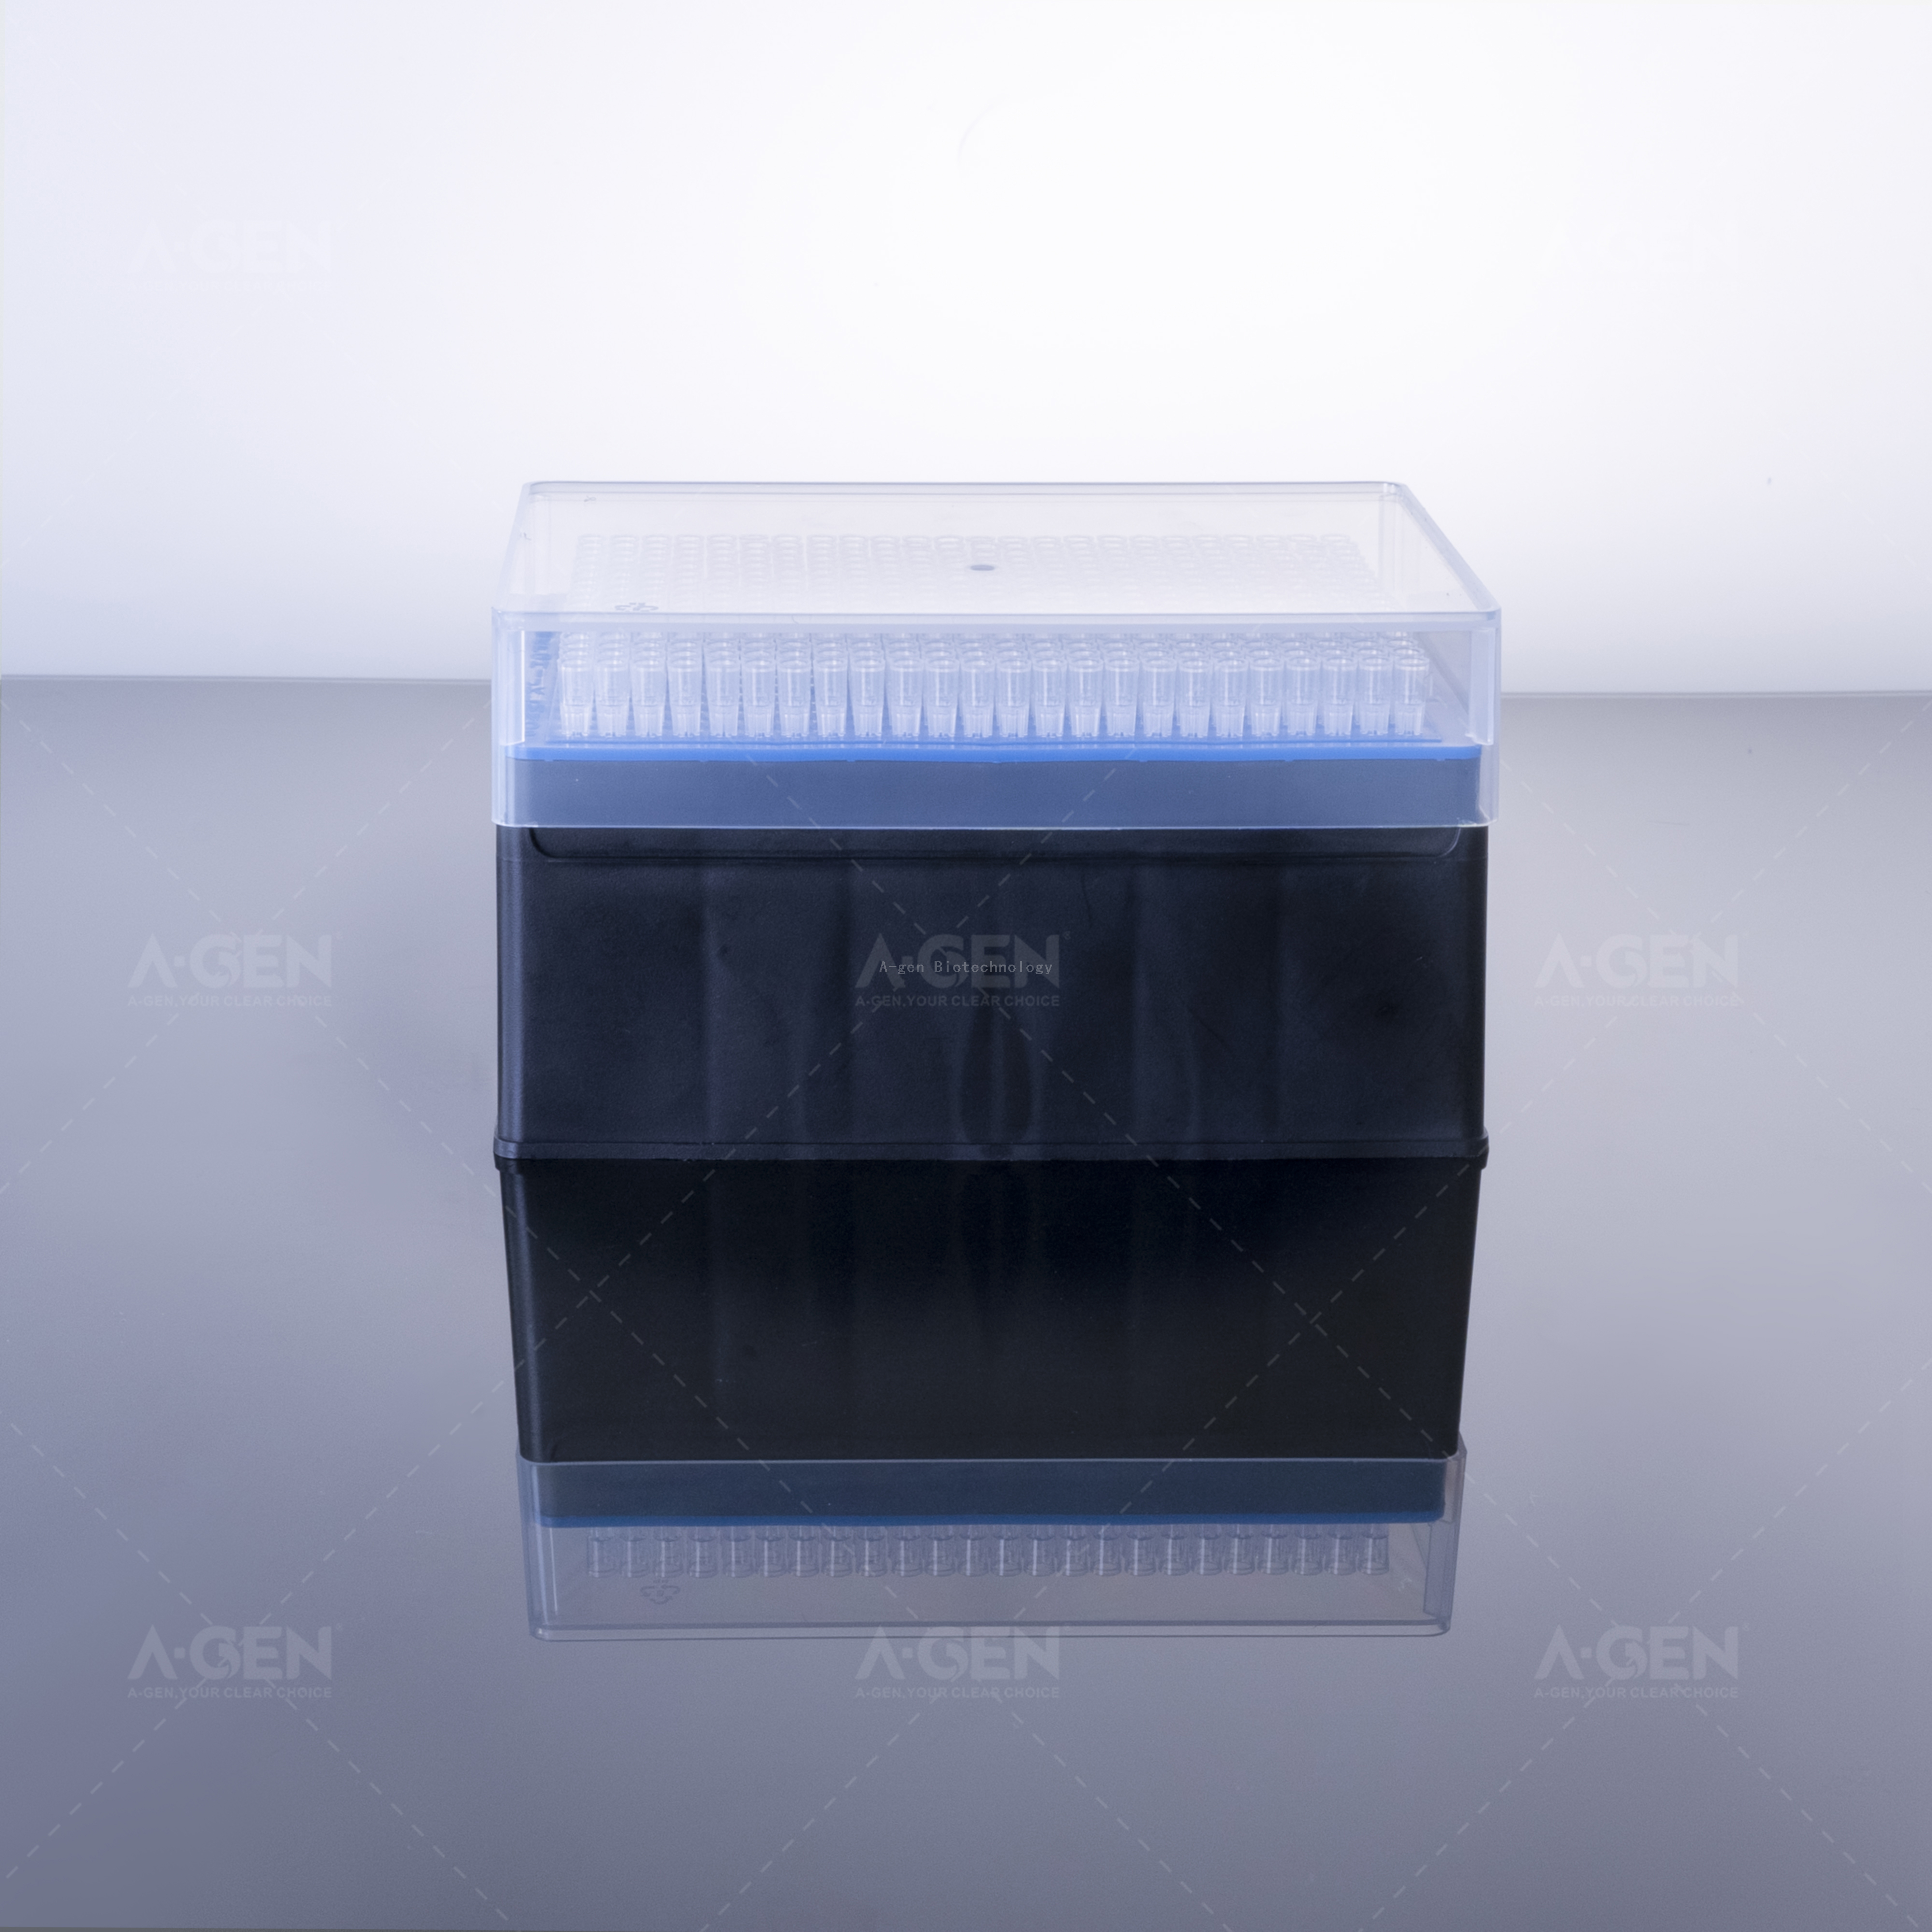 125uL Transparent Sterile 384 Integra Pipette Tips SBS Rack Package